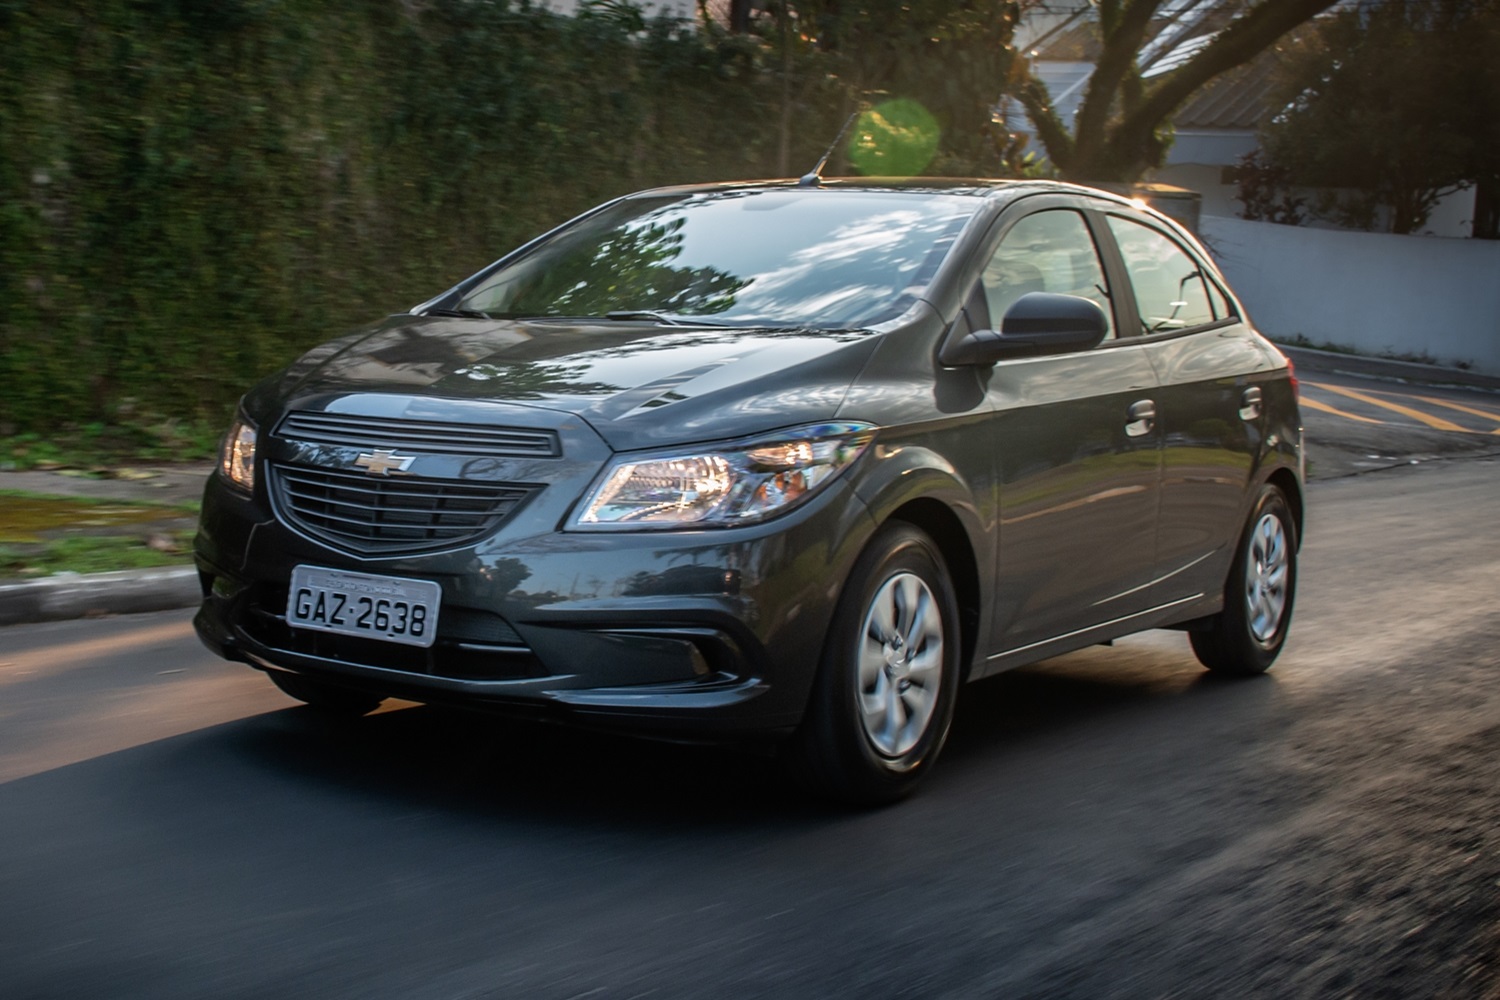 GM Relaunches First-Gen Onix As Chevrolet Joy In Brazil